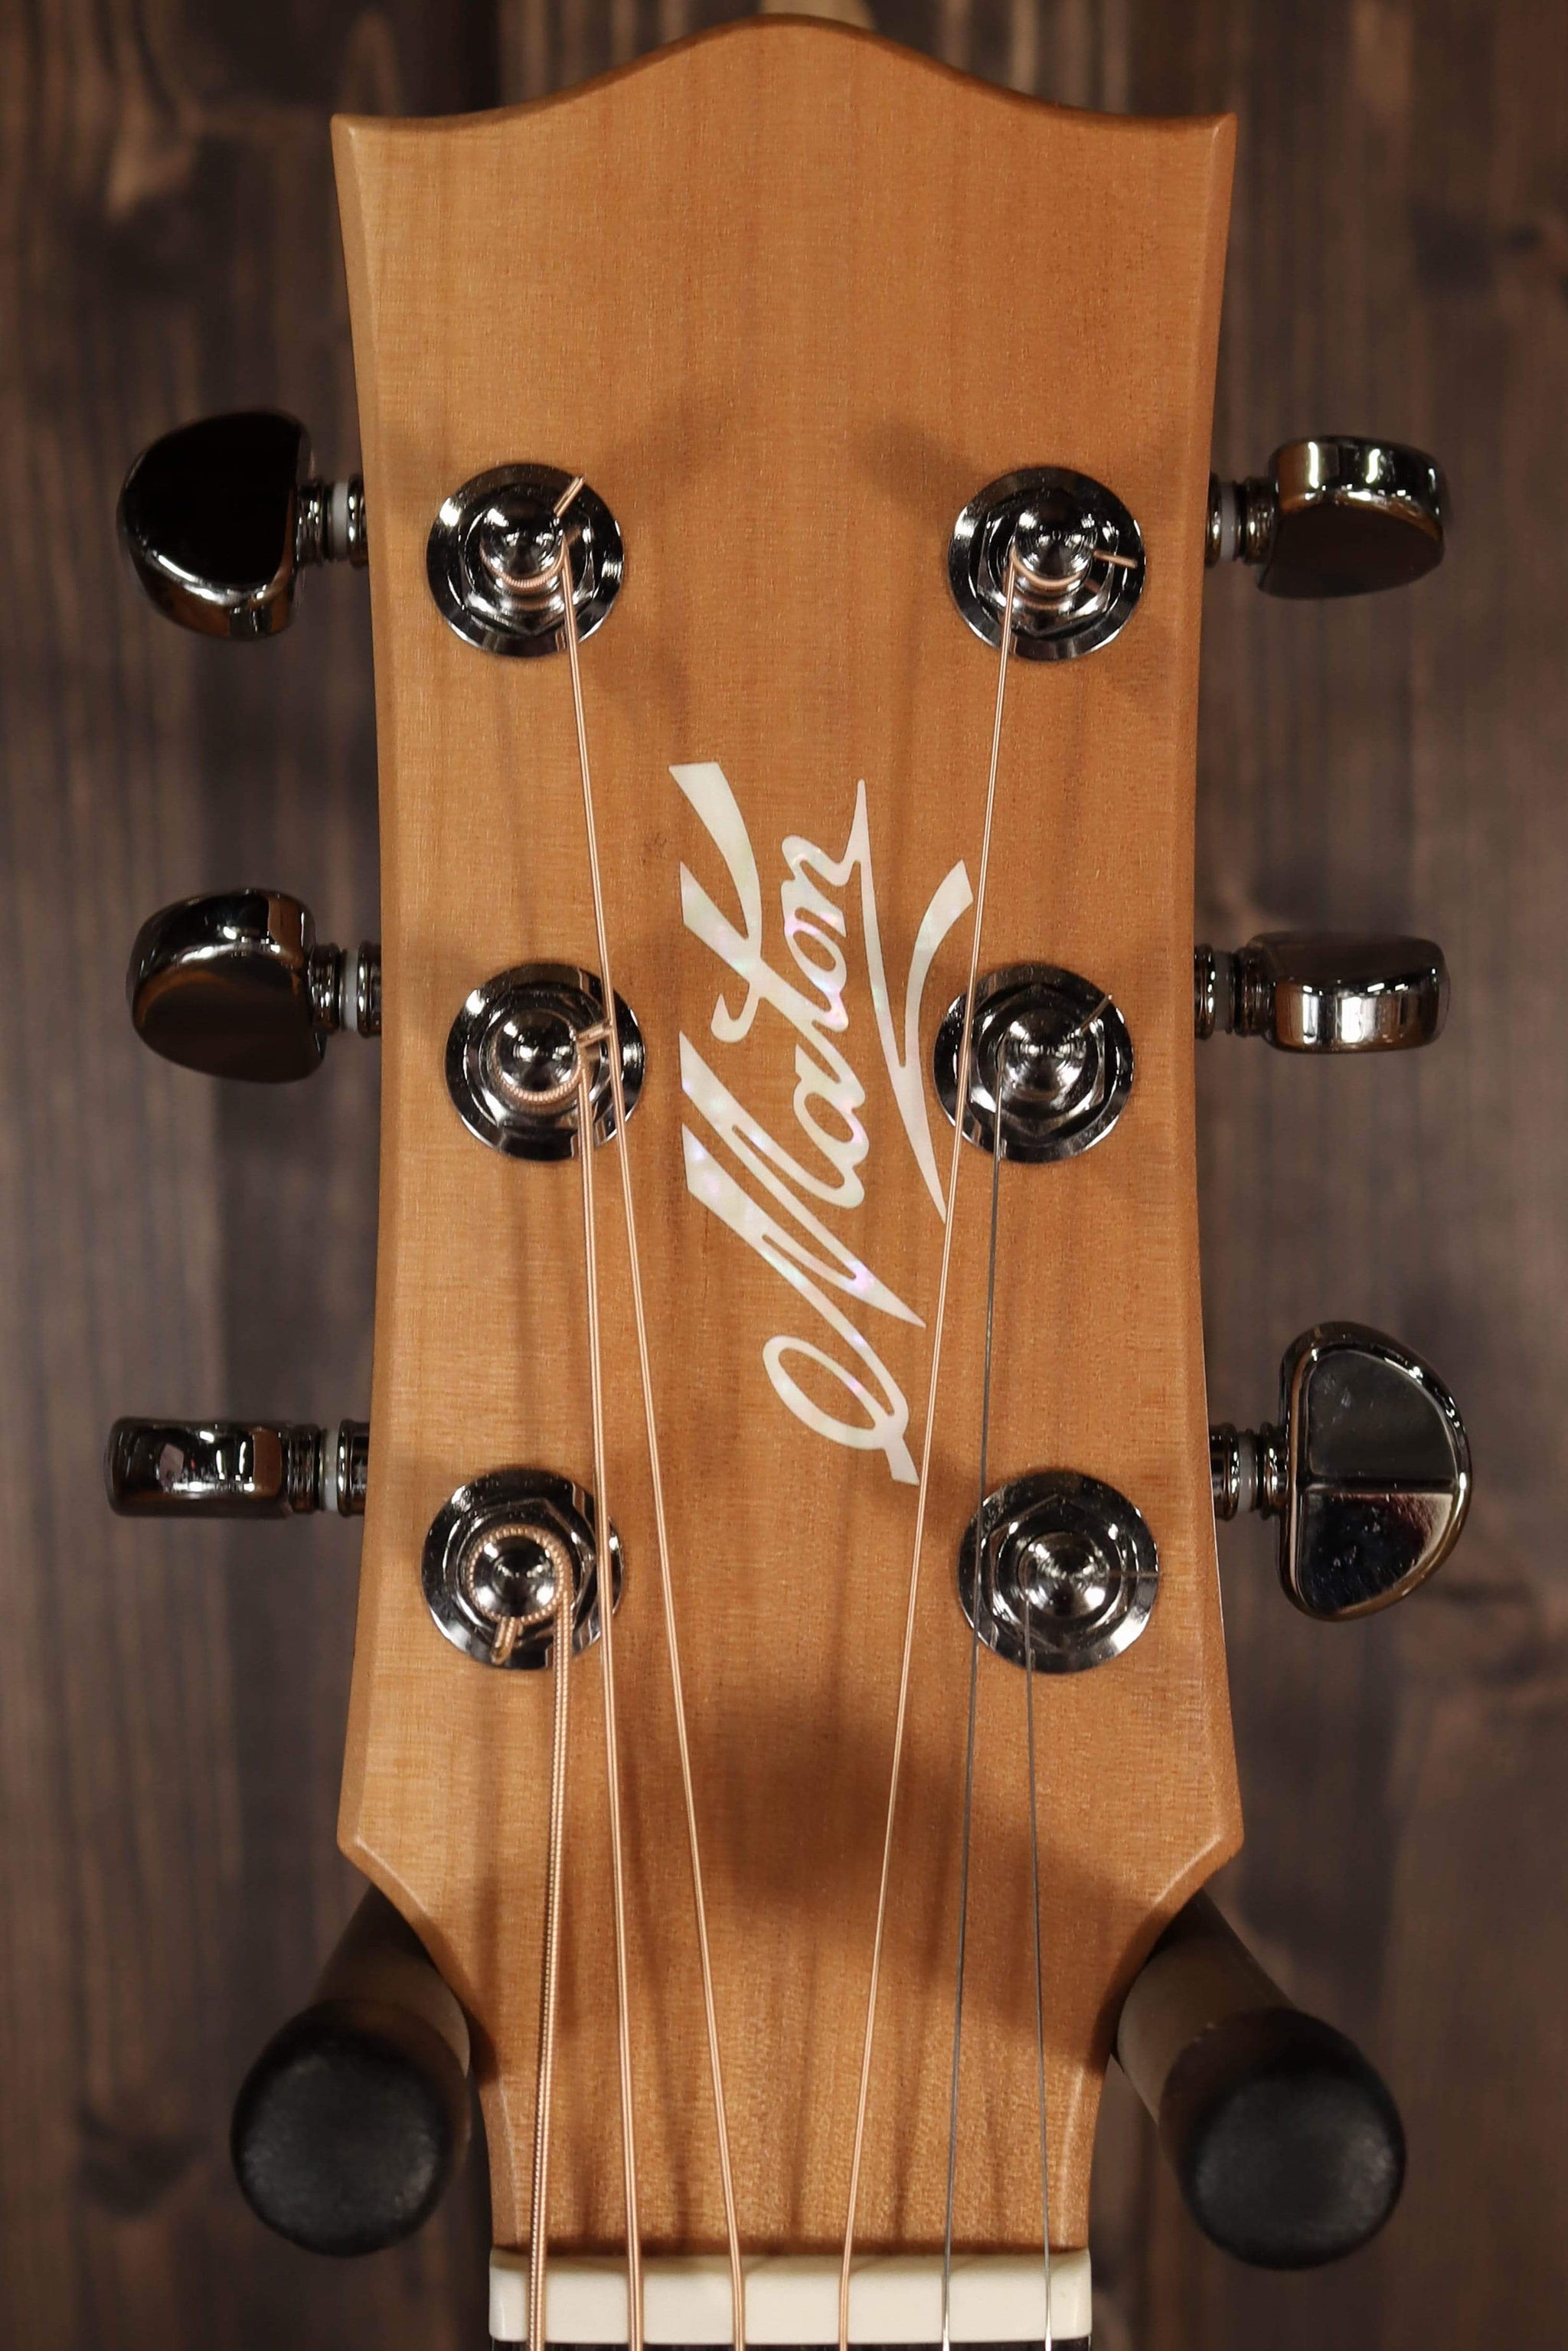 Maton Guitars EBG808C JR Signature - 14790 - Artisan Guitars